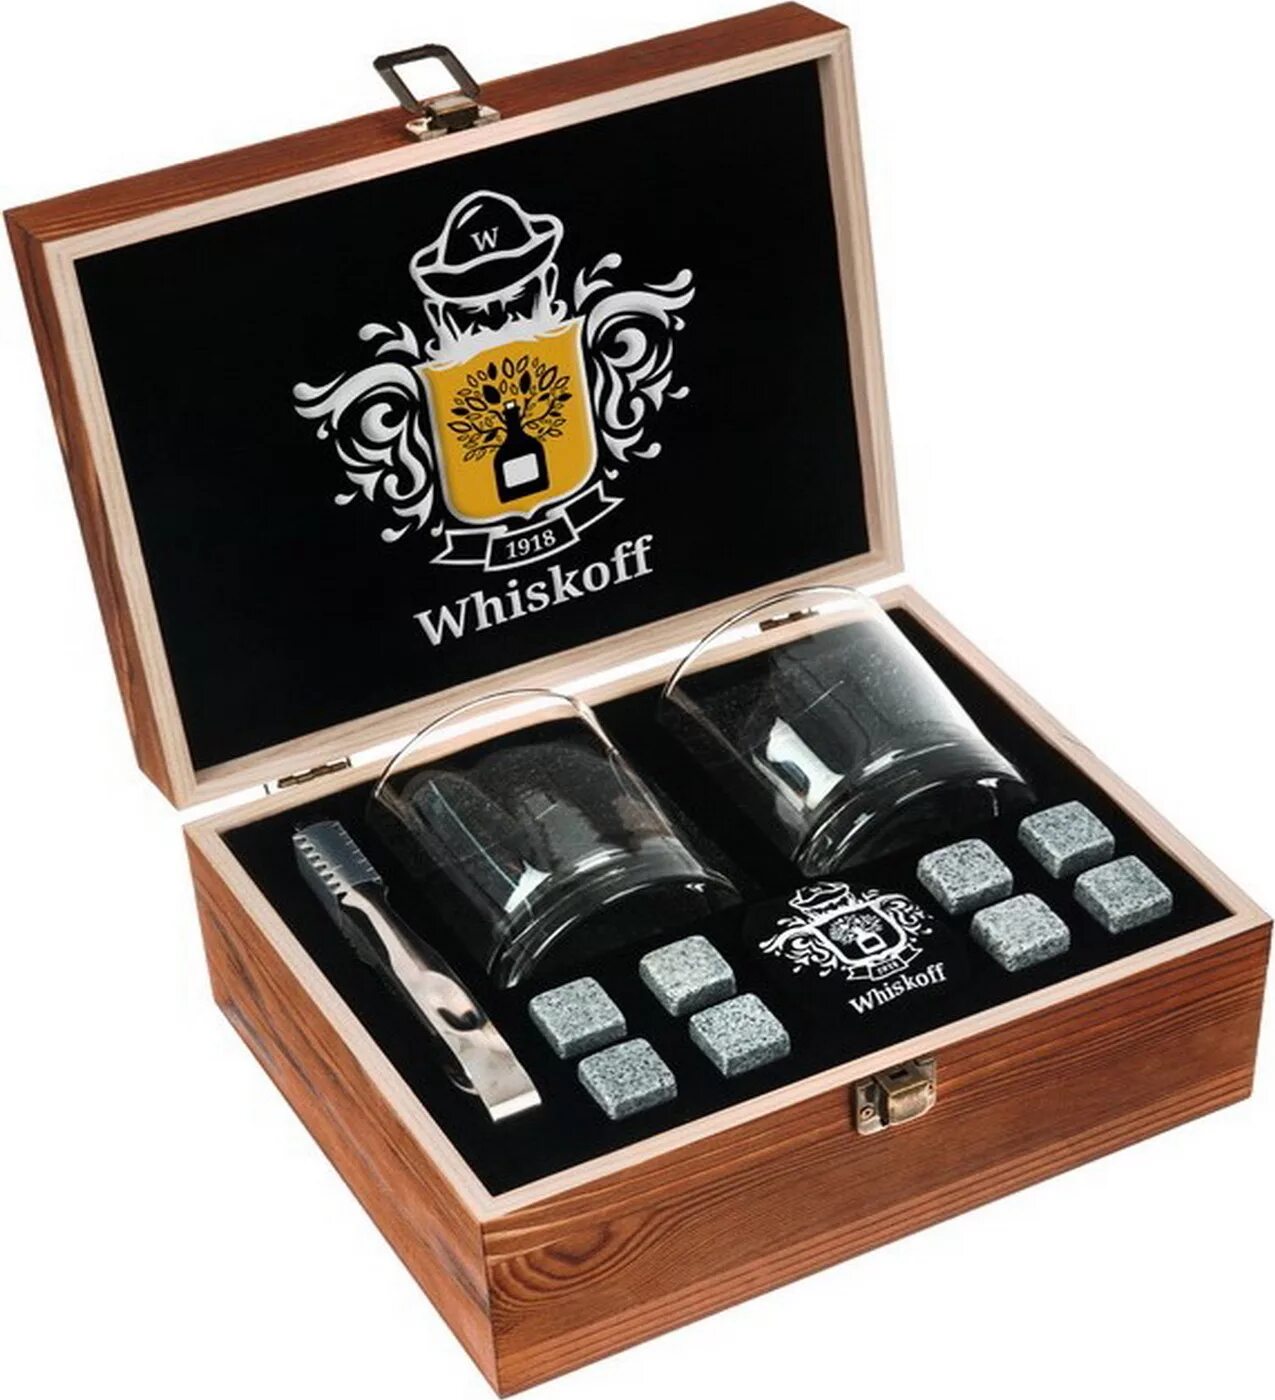 Мужской набор цена. Whiskoff наборы для виски. ВИСКОФФ набор для виски. Подарочный набор для виски Whiskoff. Набор для виски Box Whiskey.